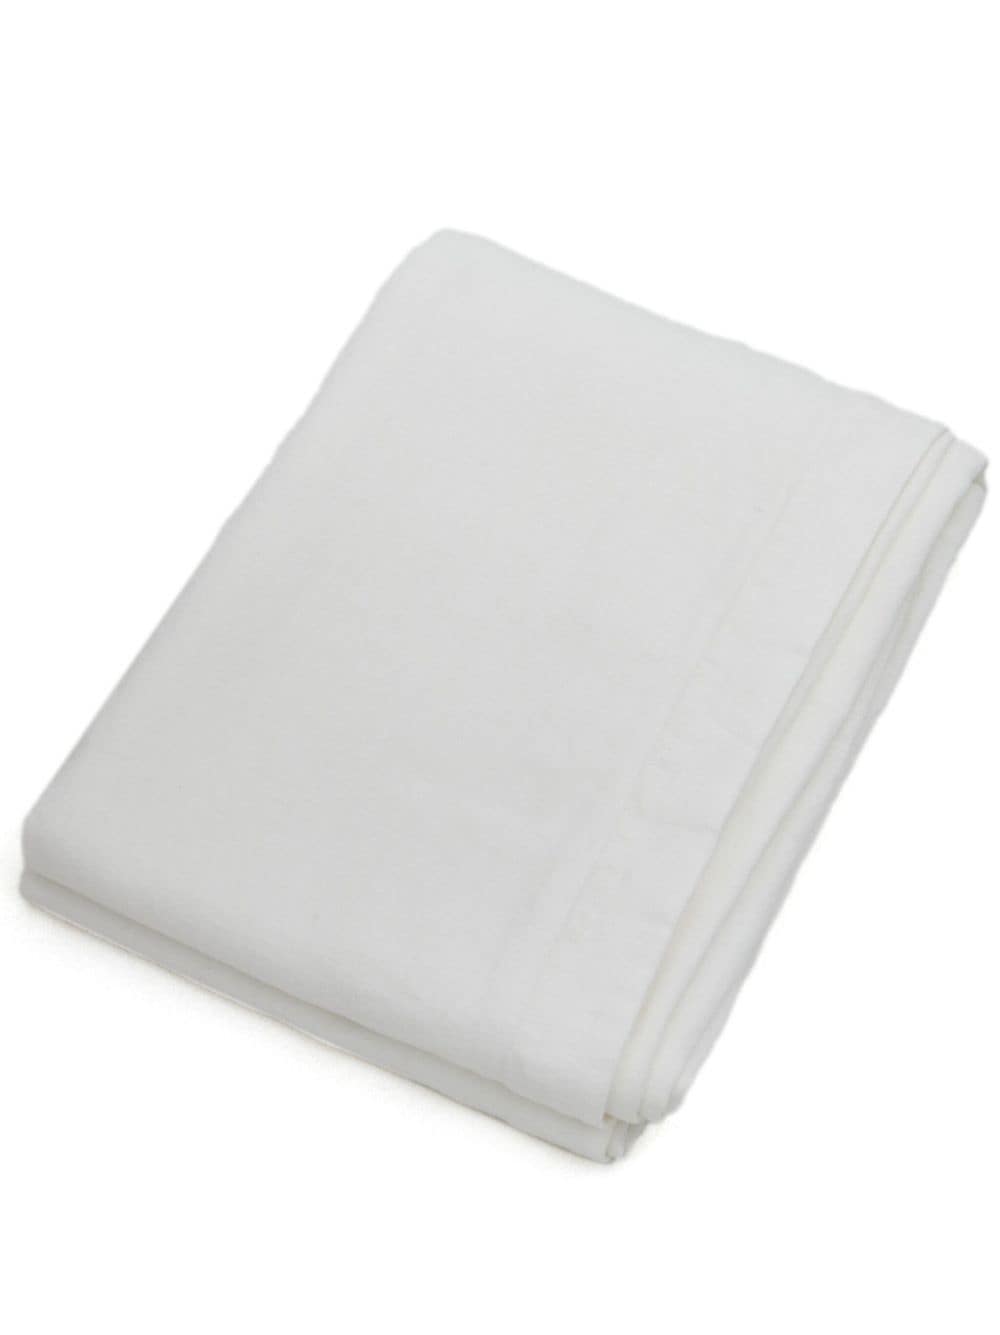 TEKLA stonewashed linen bedspread (240x260cm) - White von TEKLA